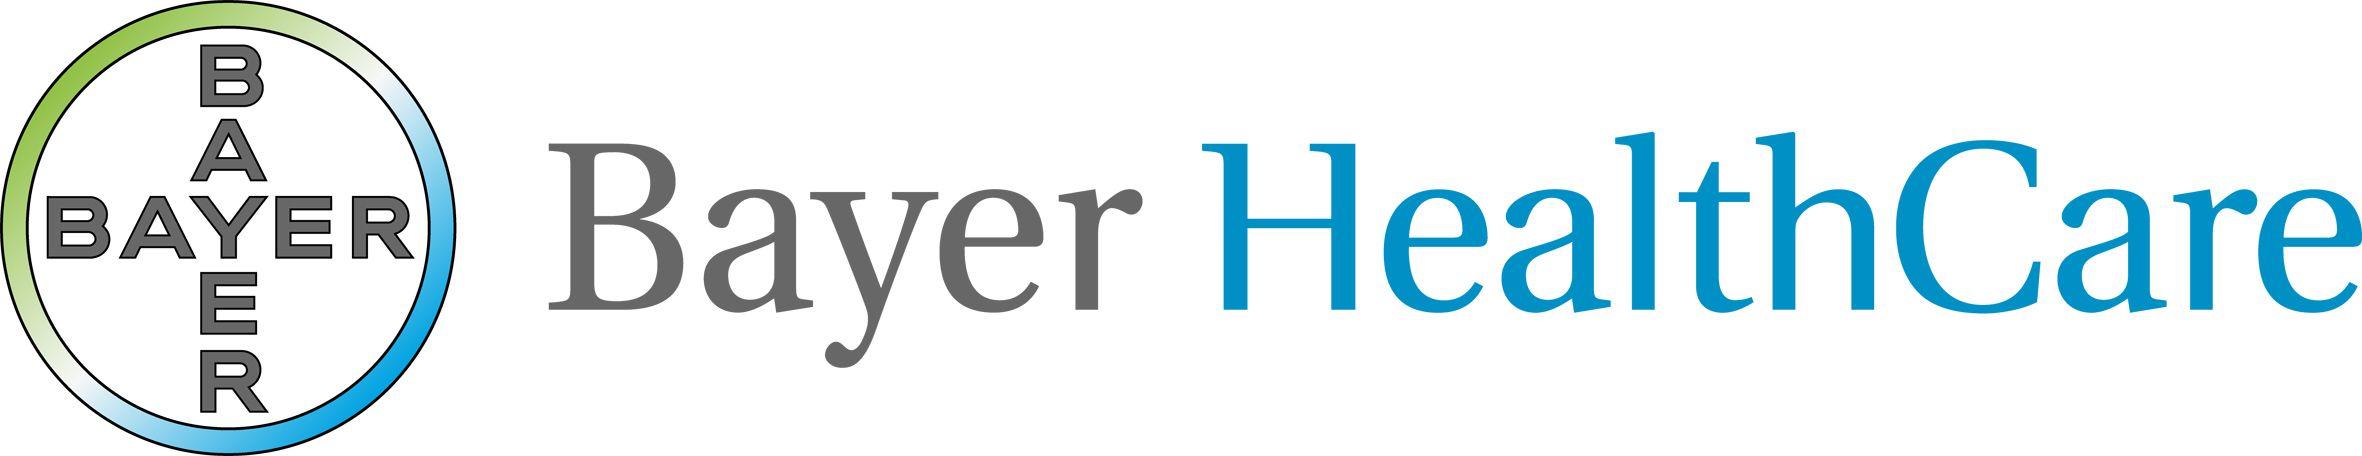 Bayer Corporation Logo - Bayer HealthCare. CEO Cancer Gold Standard